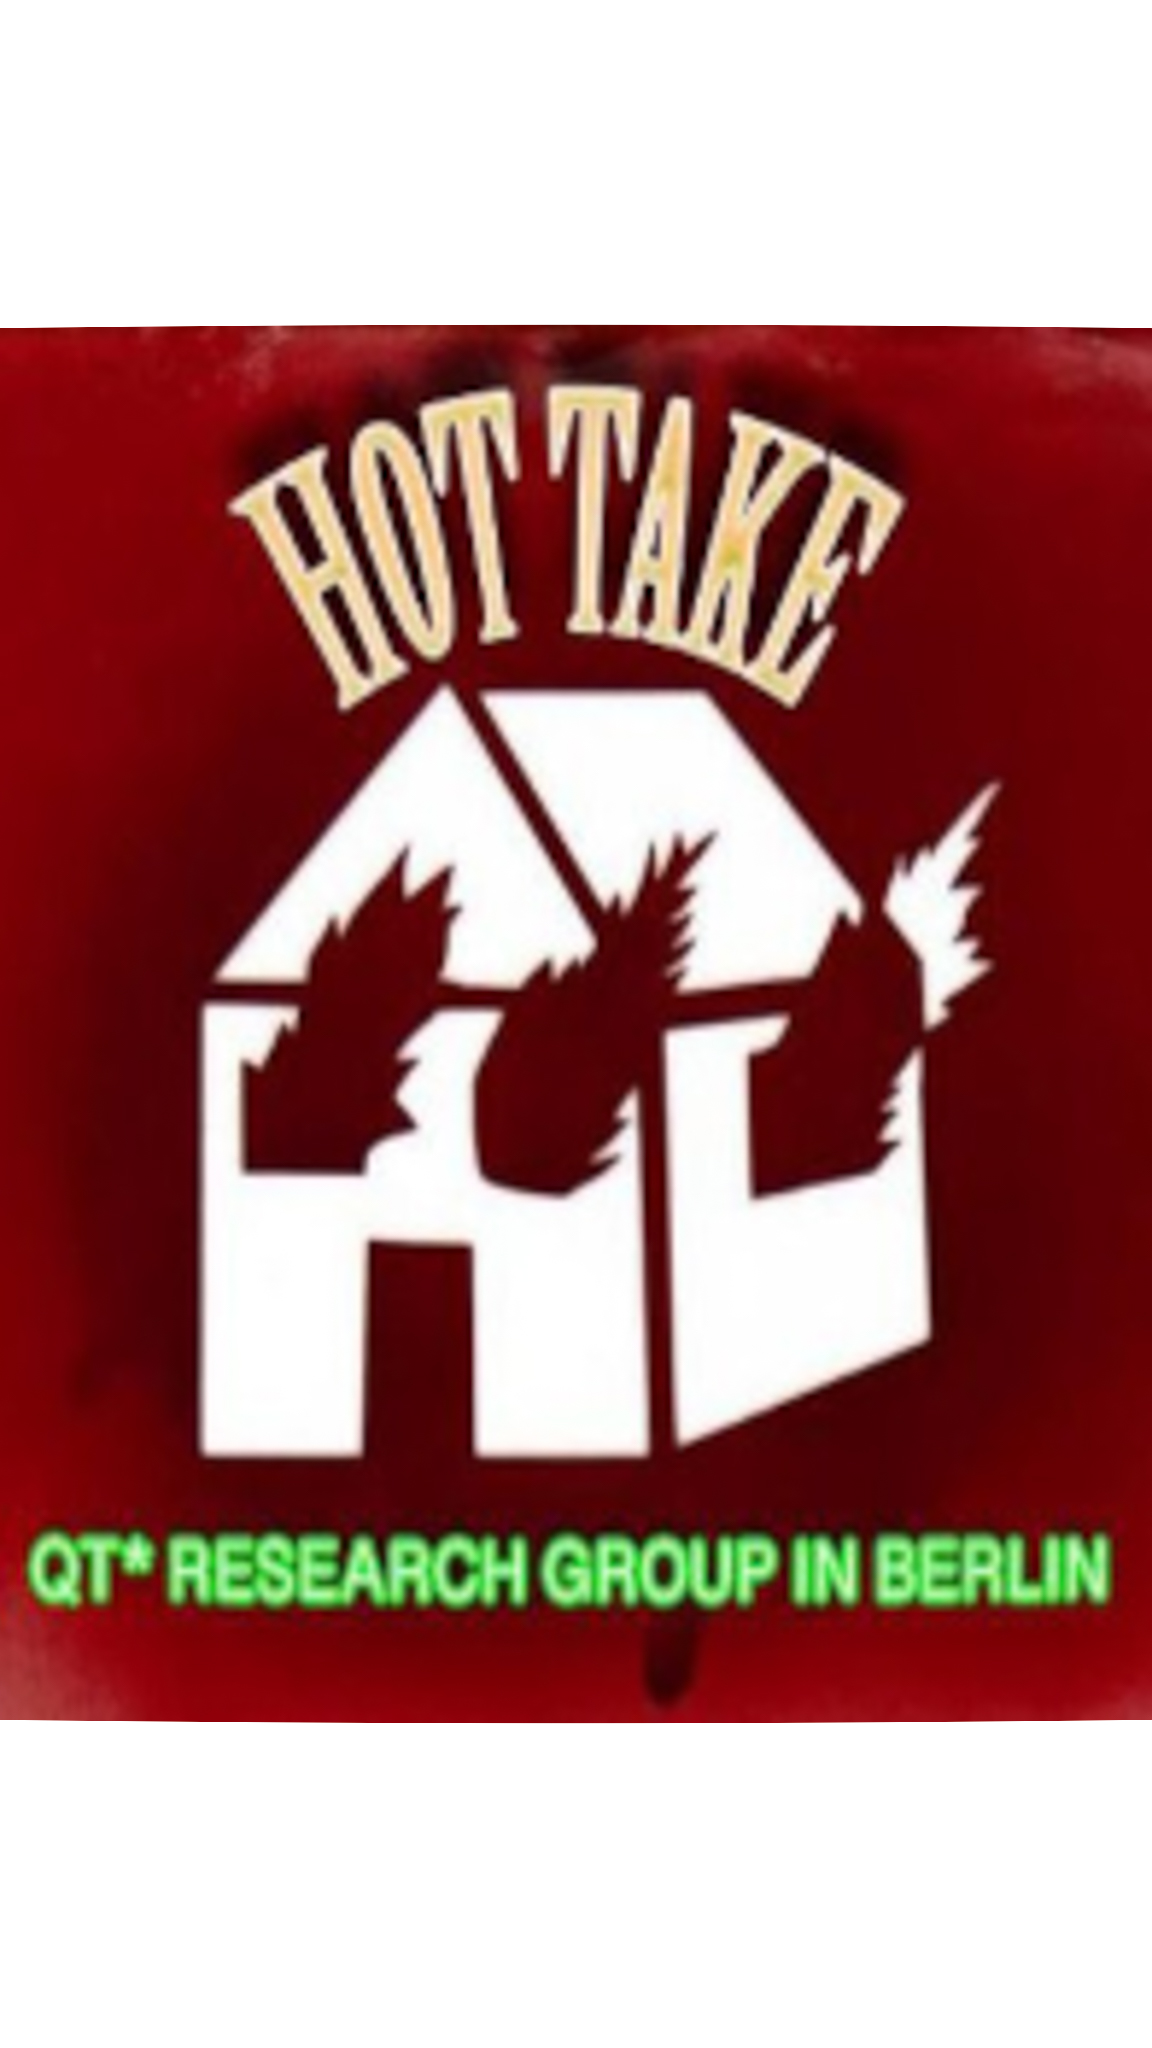 Hot Take Logo Research Group